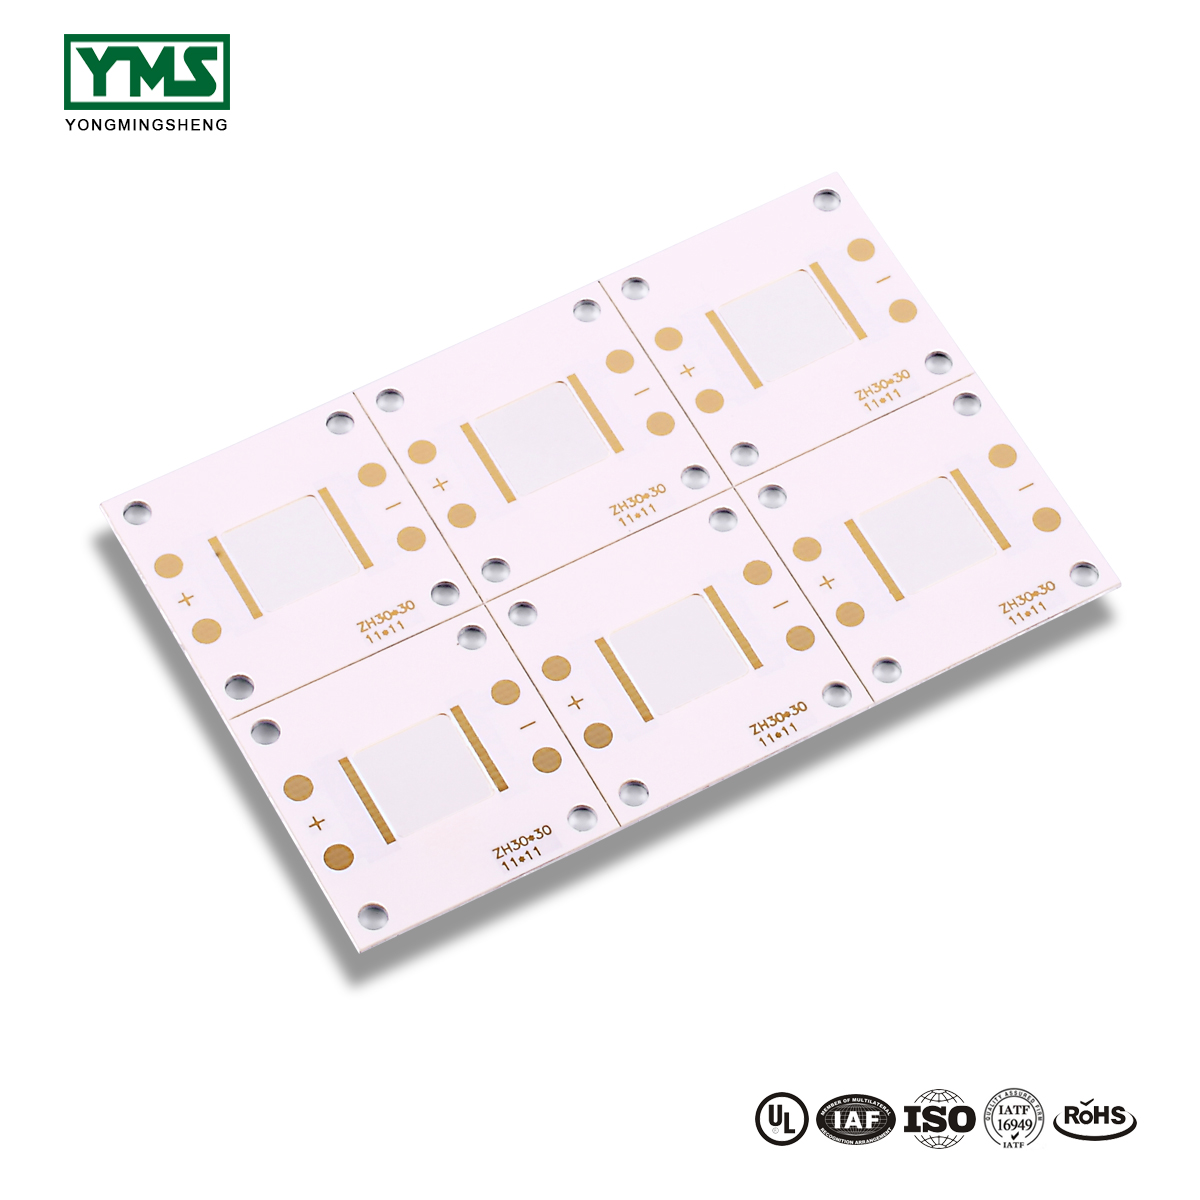 Factory directly Rigid-Flex Circuits - 1Layer mirror Aluminum Base Board | YMSPCB – Yongmingsheng